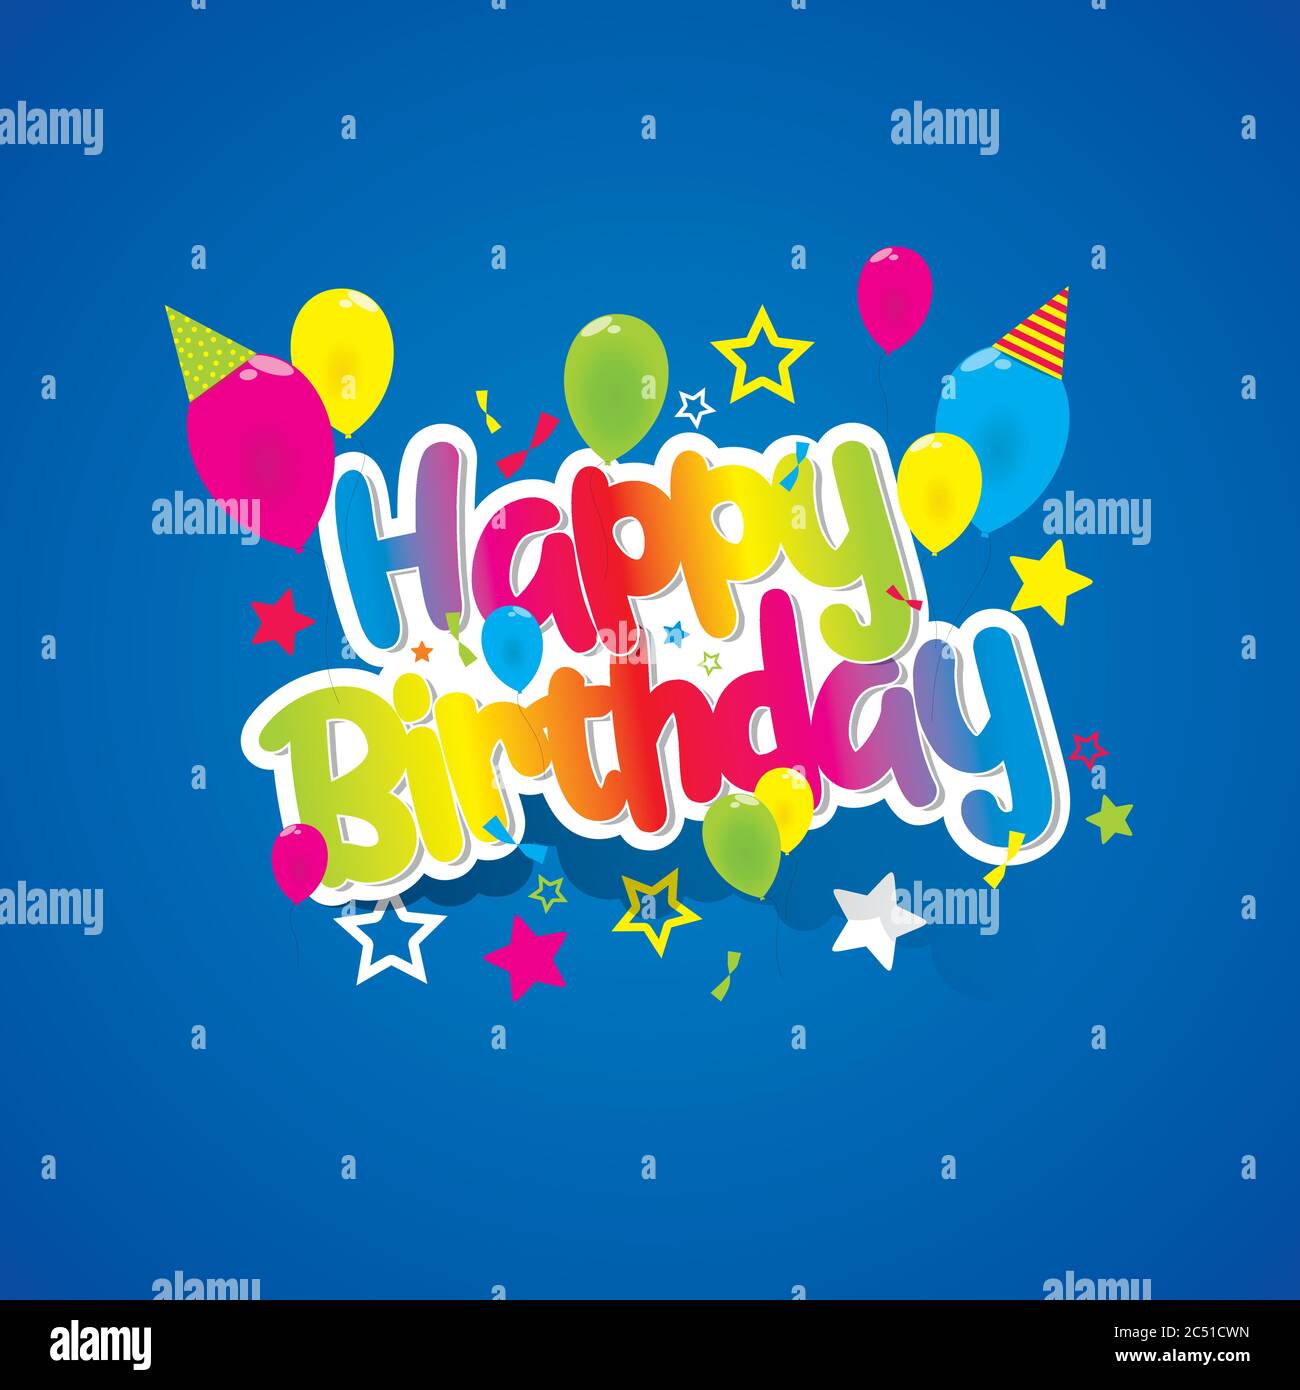 Happy birthday greeting card with rainbow text vector illustration ...